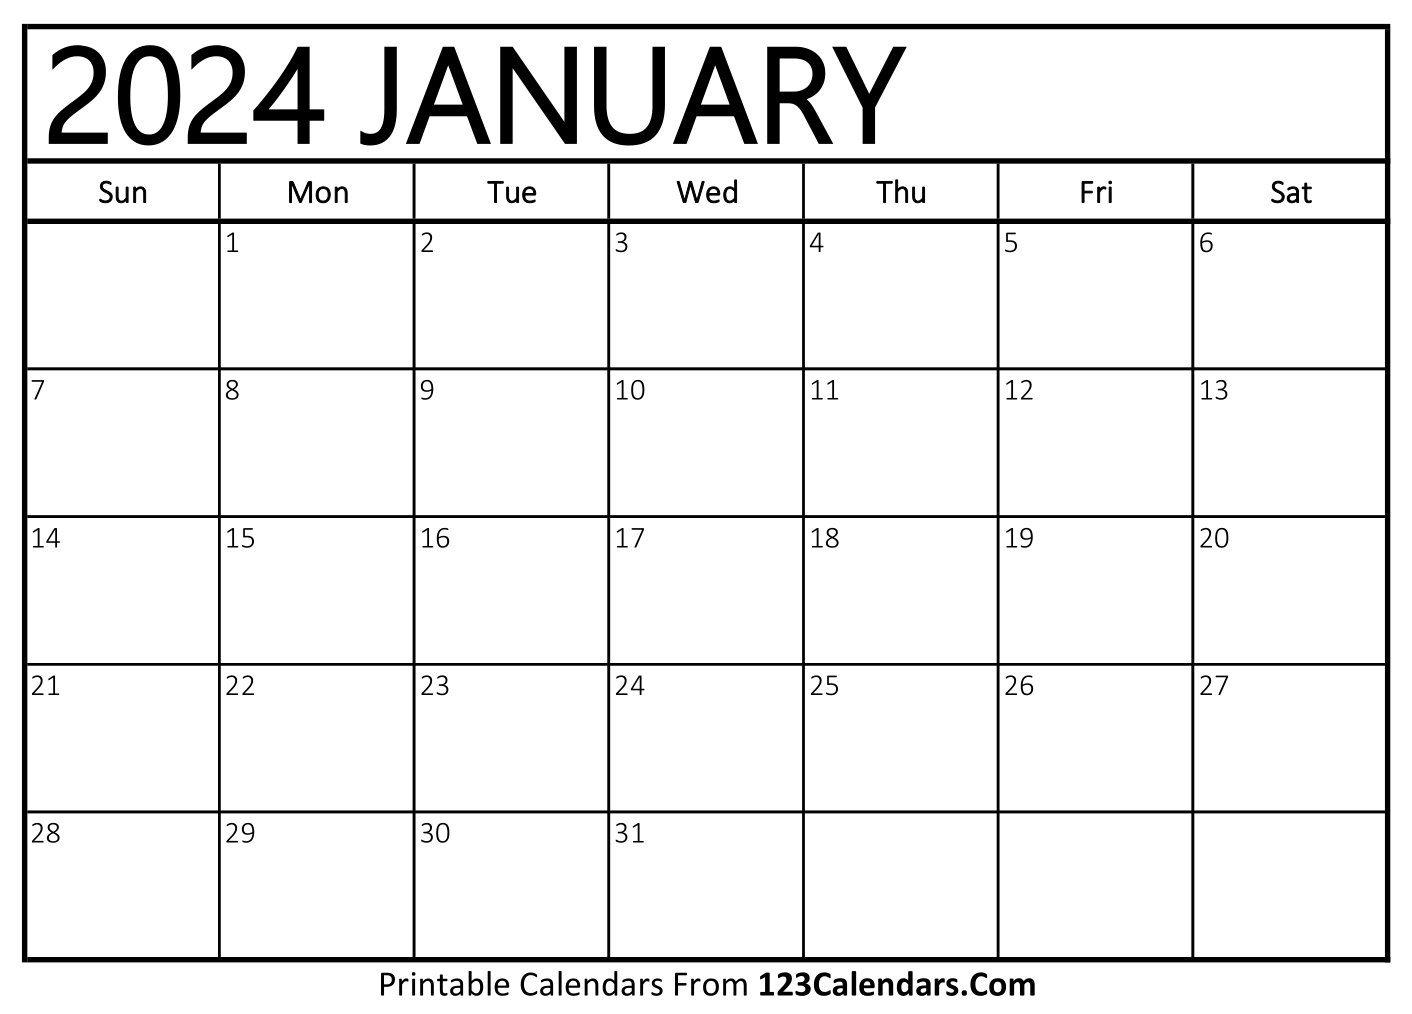 Printable January 2024 Calendar Templates - 123Calendars | Printable Calendar 2024 January Wiki